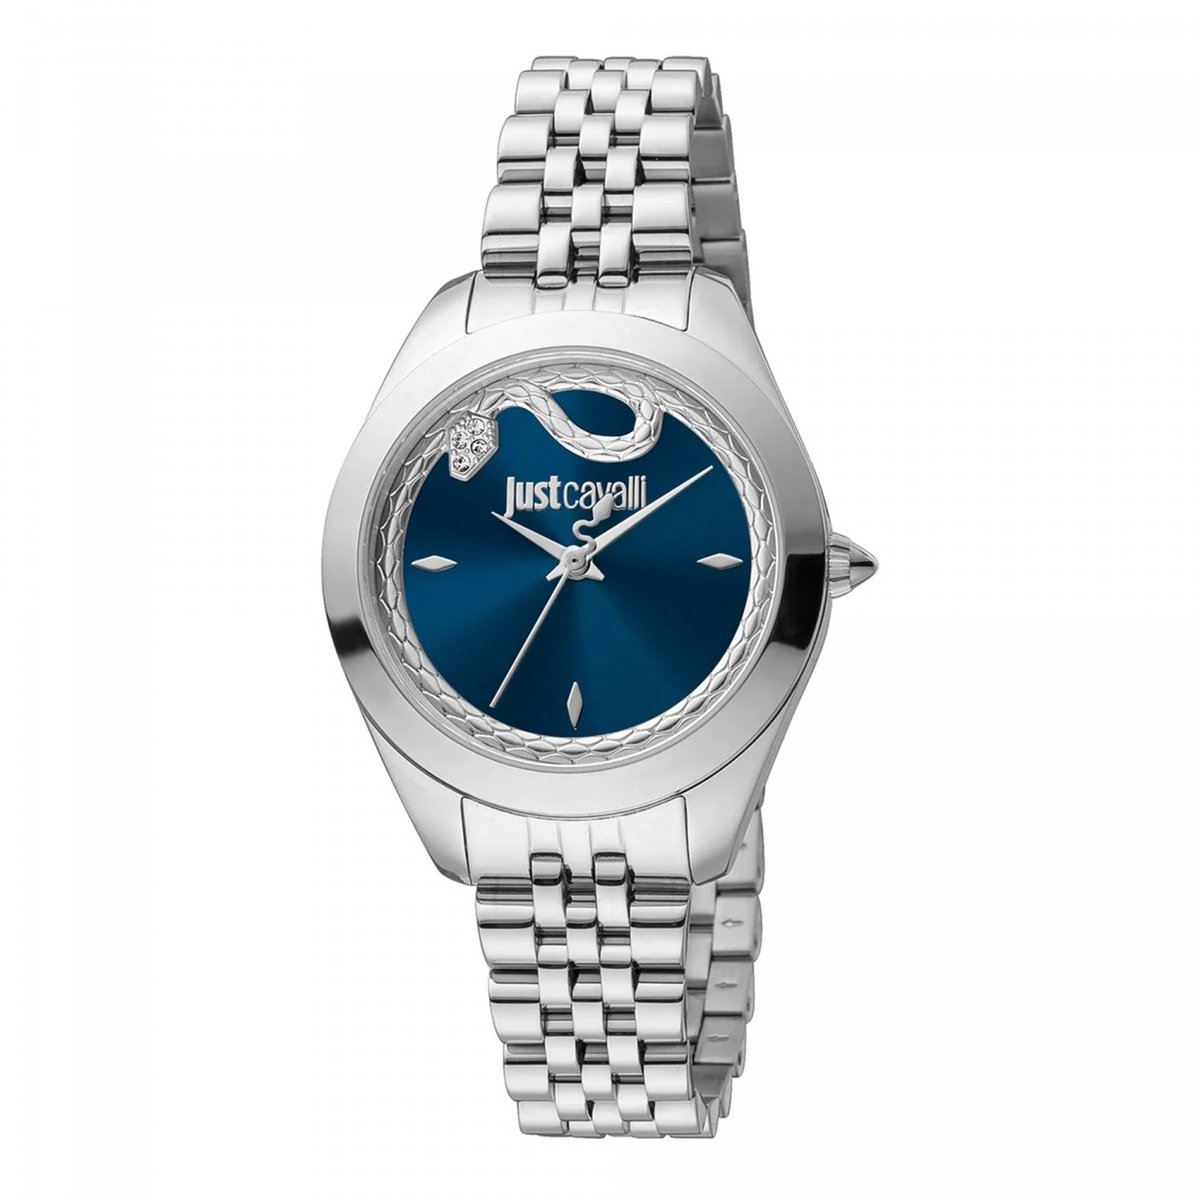 Just Cavalli Damen-Uhren Analog Quarz One Size Blau 32019803